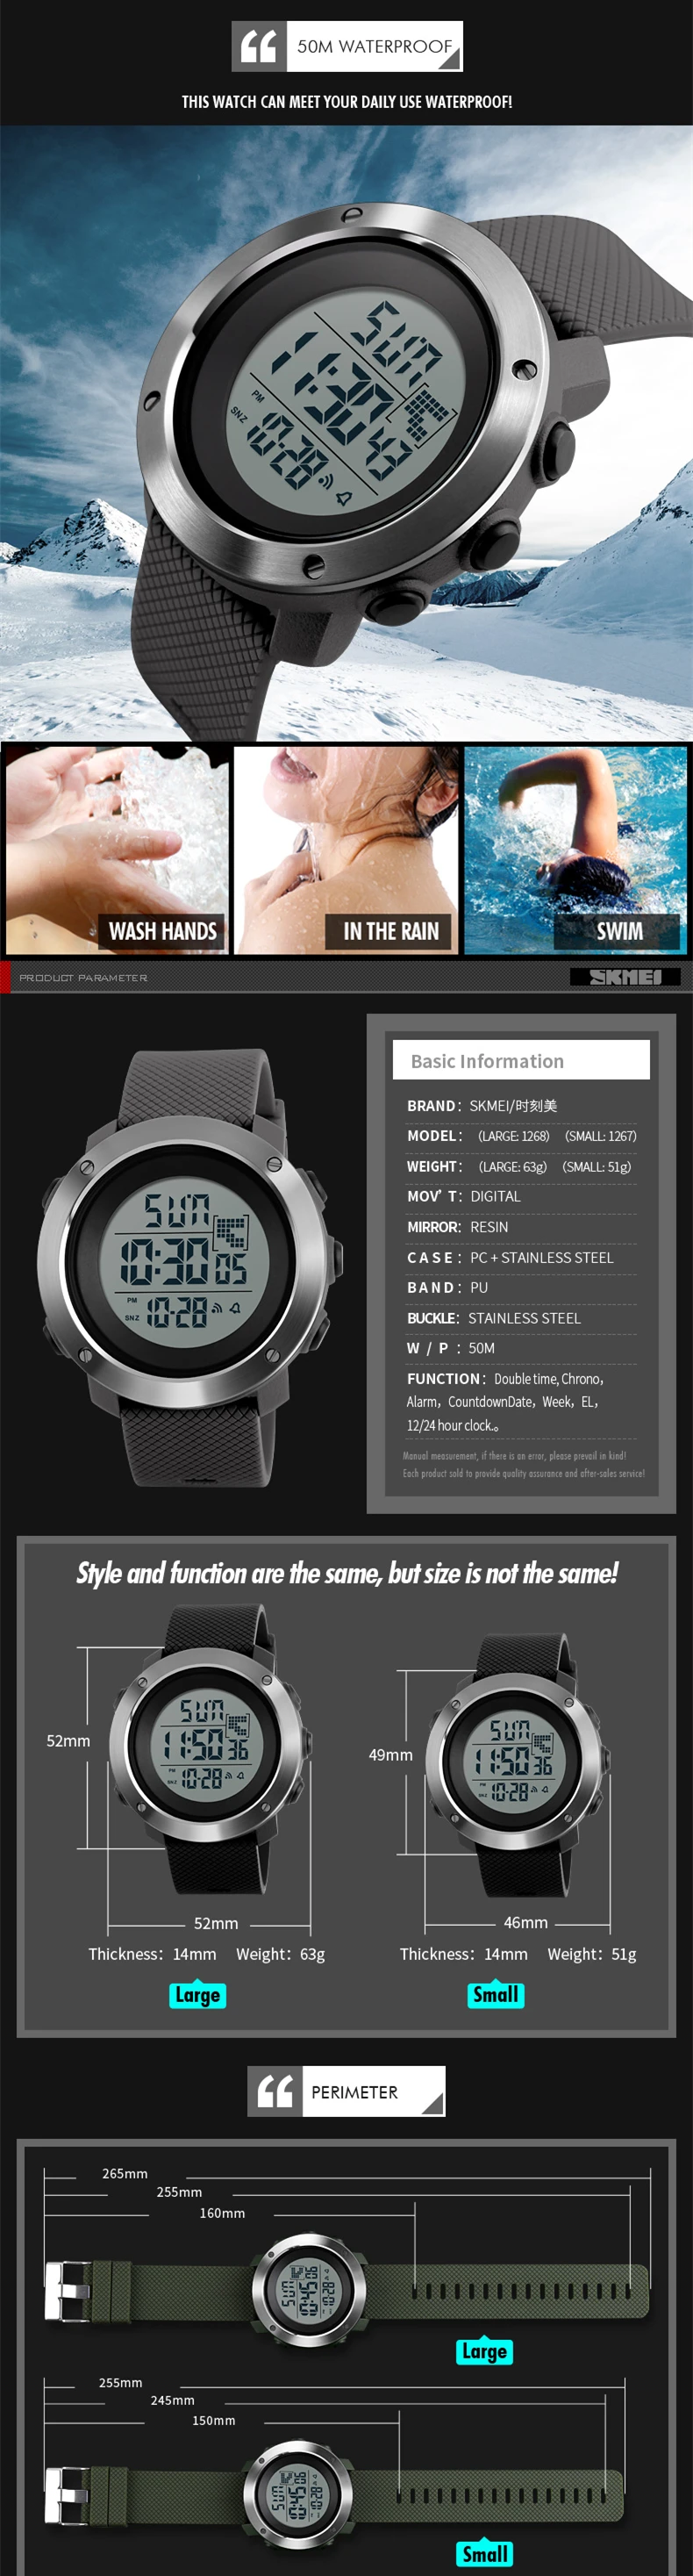 AliExpress Hot skmei 1267 Small size Men Digital Wristwatch Fashion countdown Watches